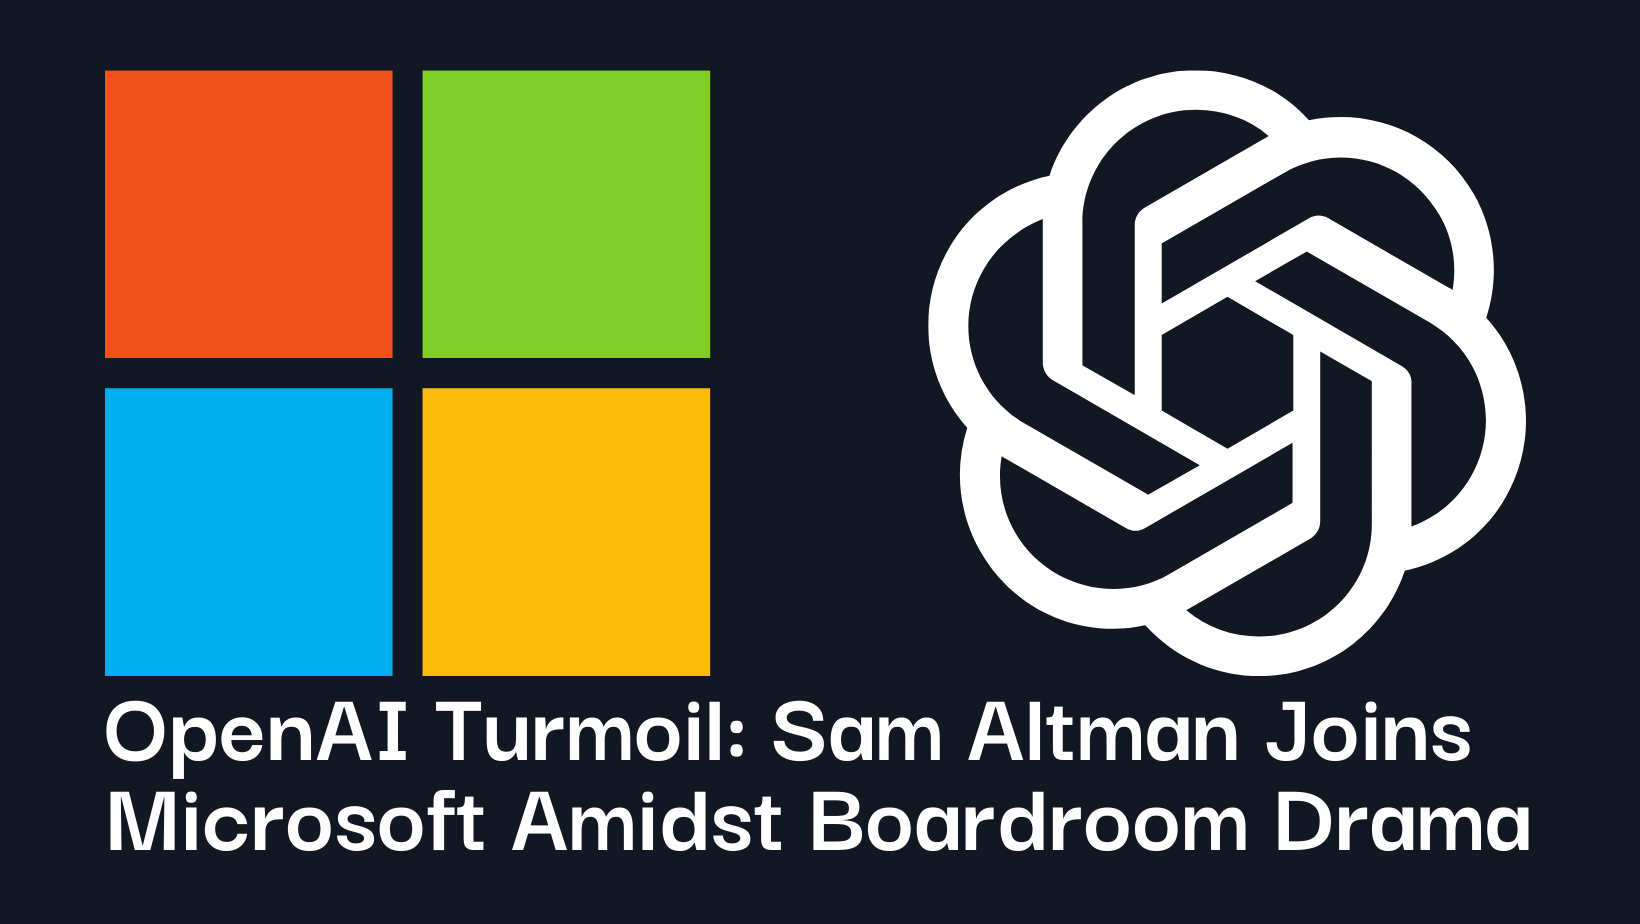 OpenAI Turmoil Sam Altman Joins Microsoft Amidst Boardroom Drama